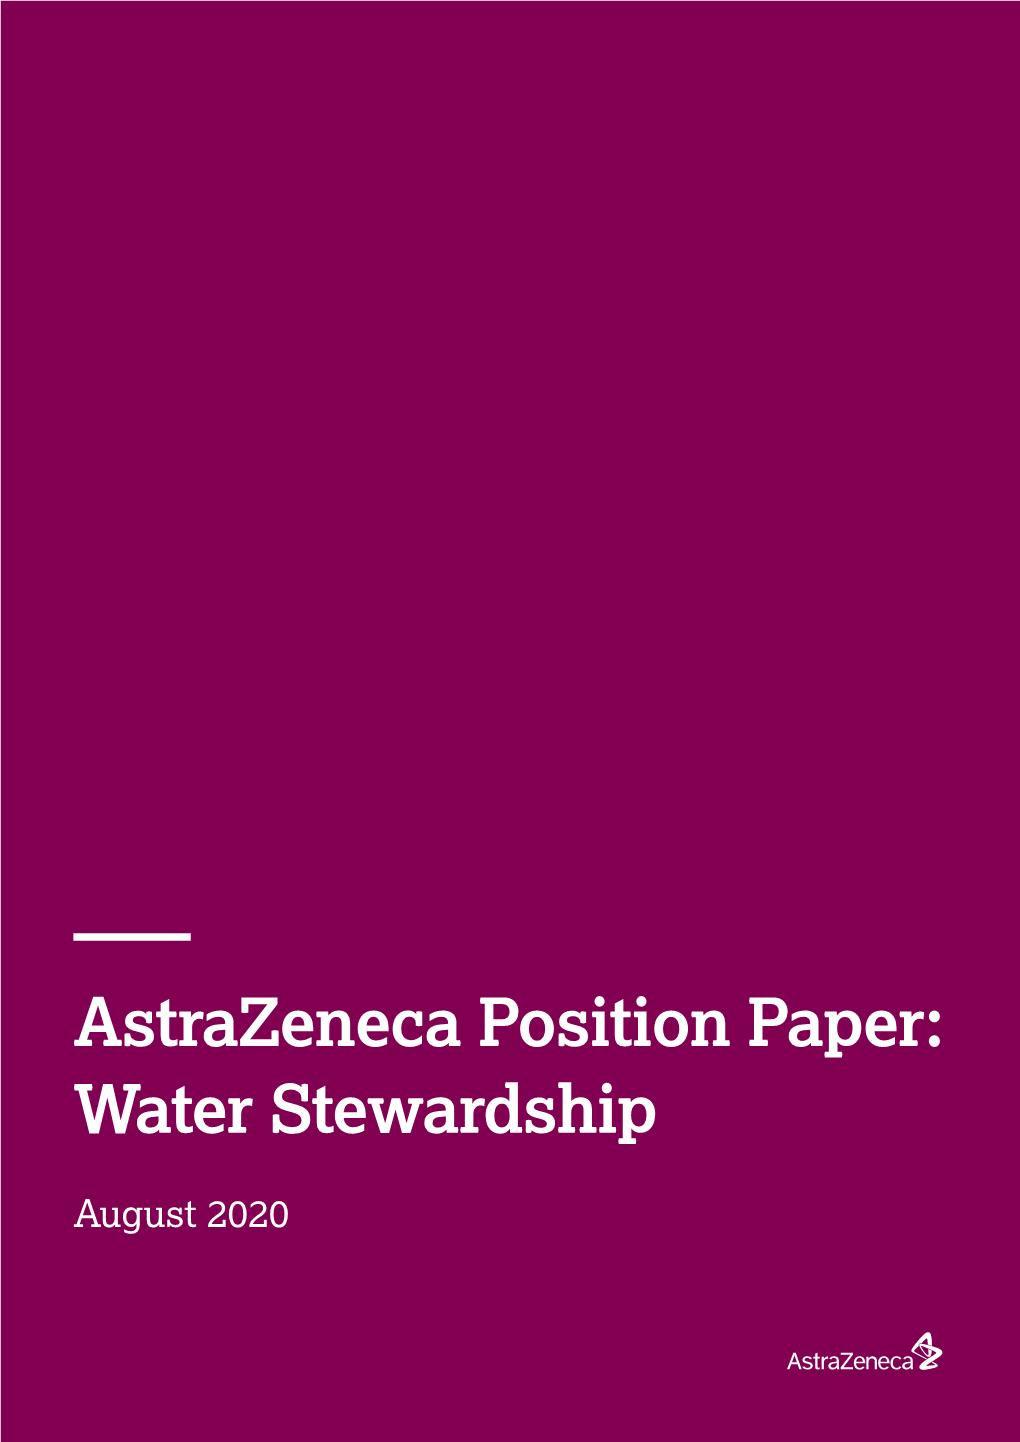 Water Stewardship Position Paper